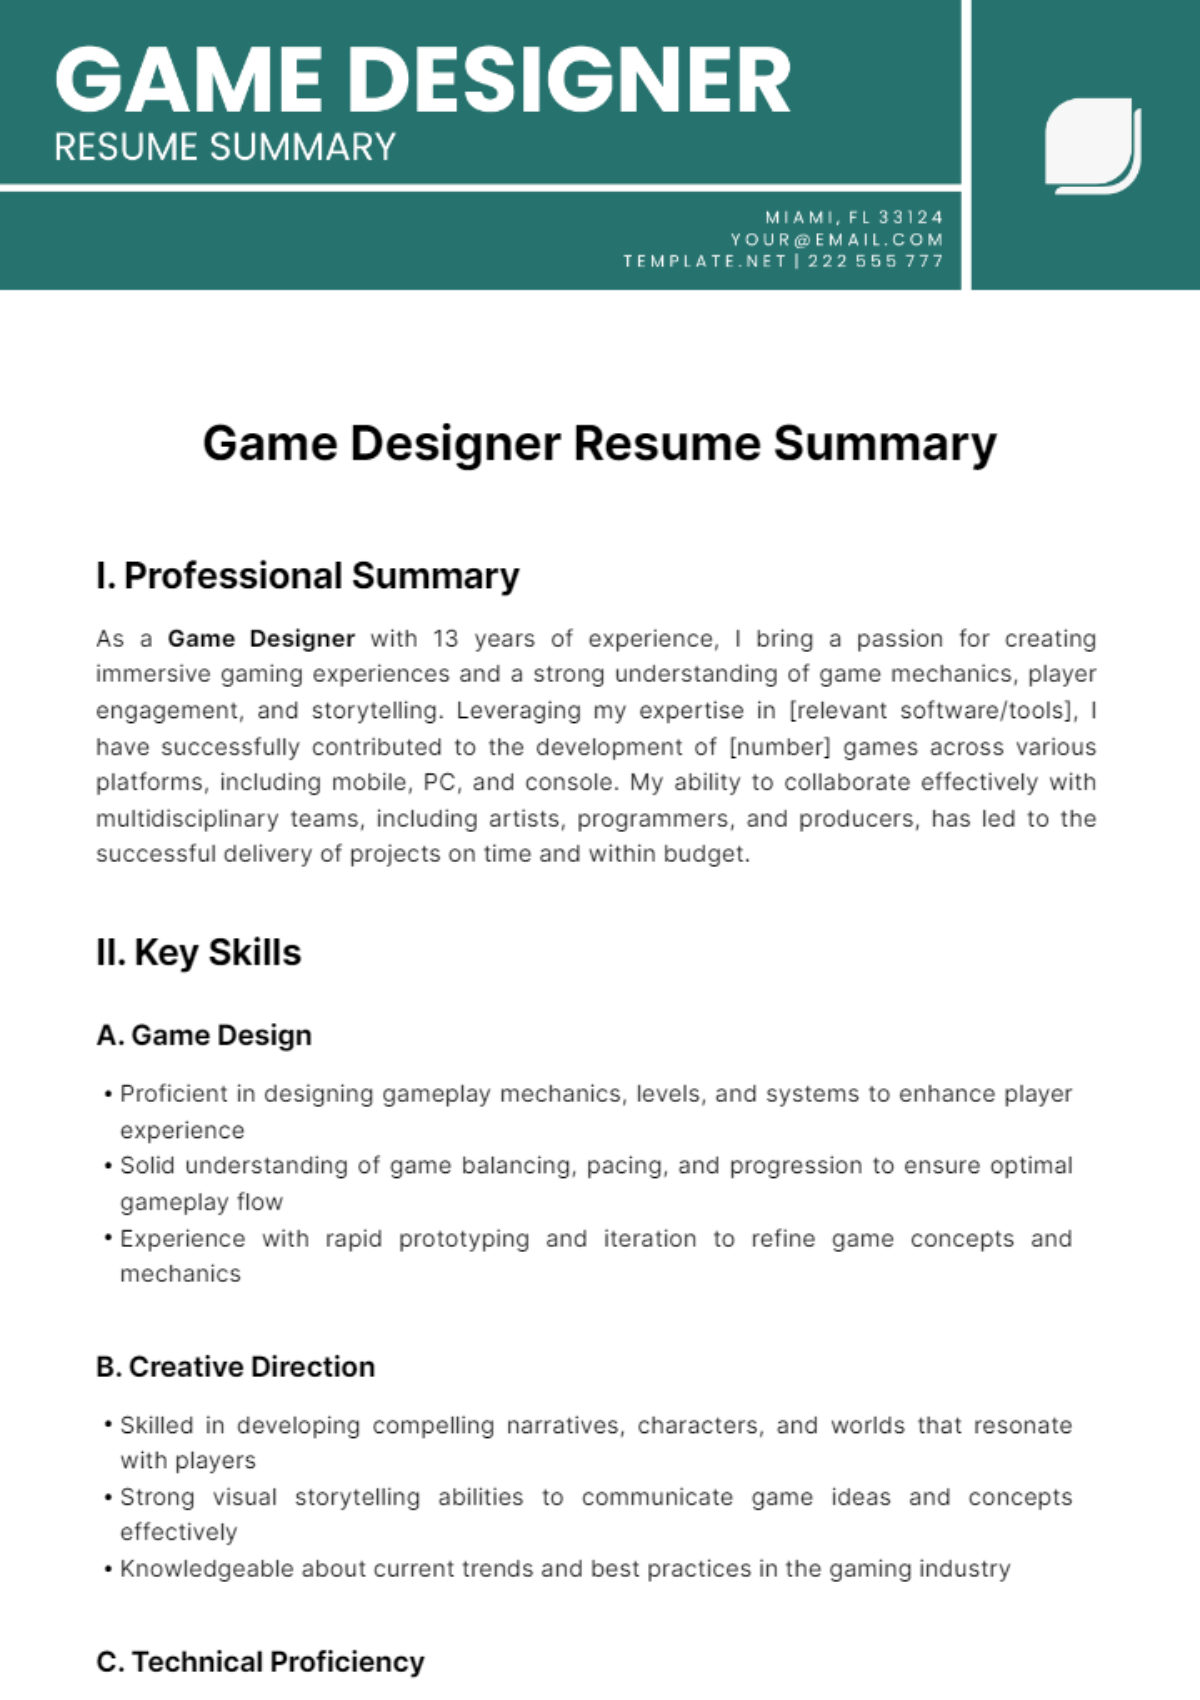 Game Designer Resume Summary Template